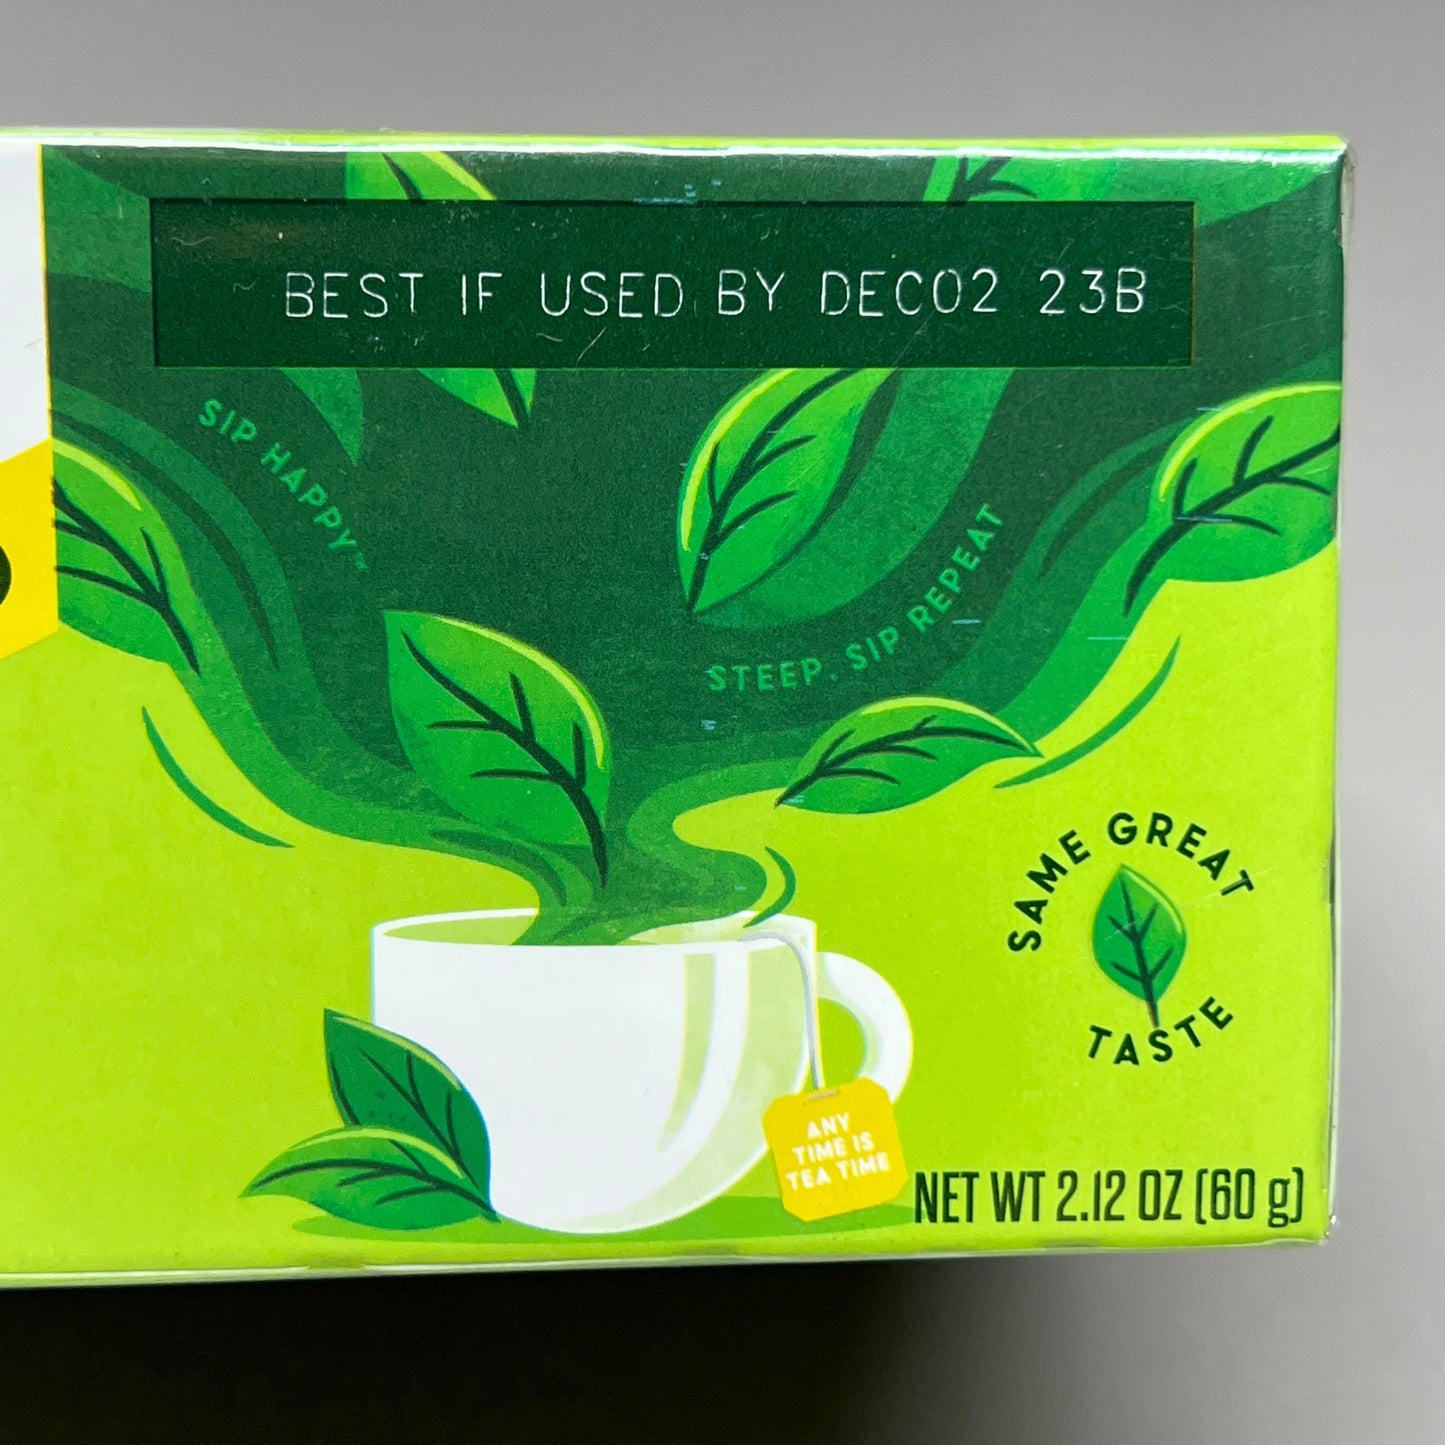 ZA@ SALADA 2PK! Decaffeinated Classic Green Tea 40 Count Bags BB Dec 2023 (AS-IS) C